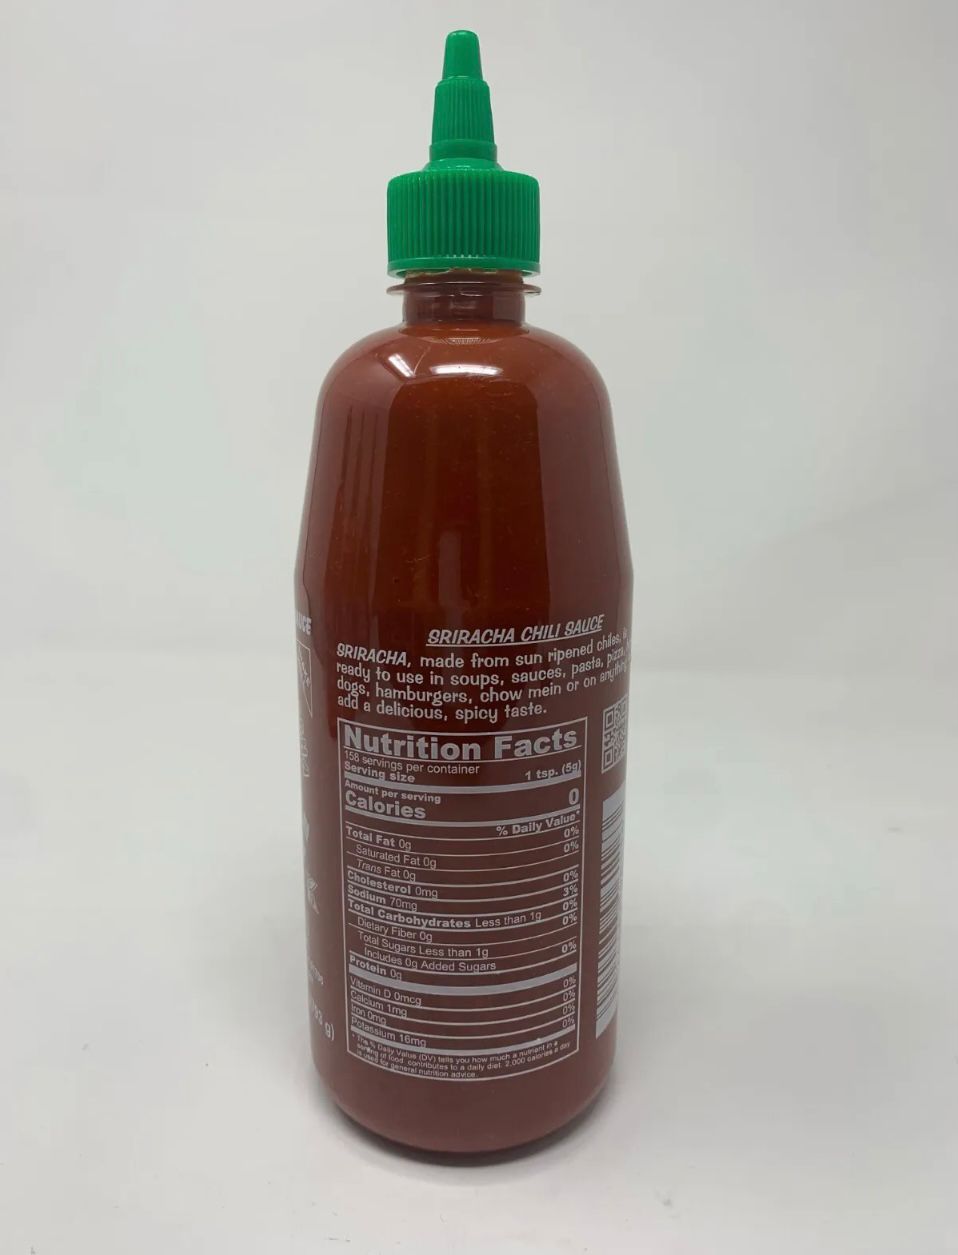 Huy Fong Sriracha Hot Chili Sauce 28oz.